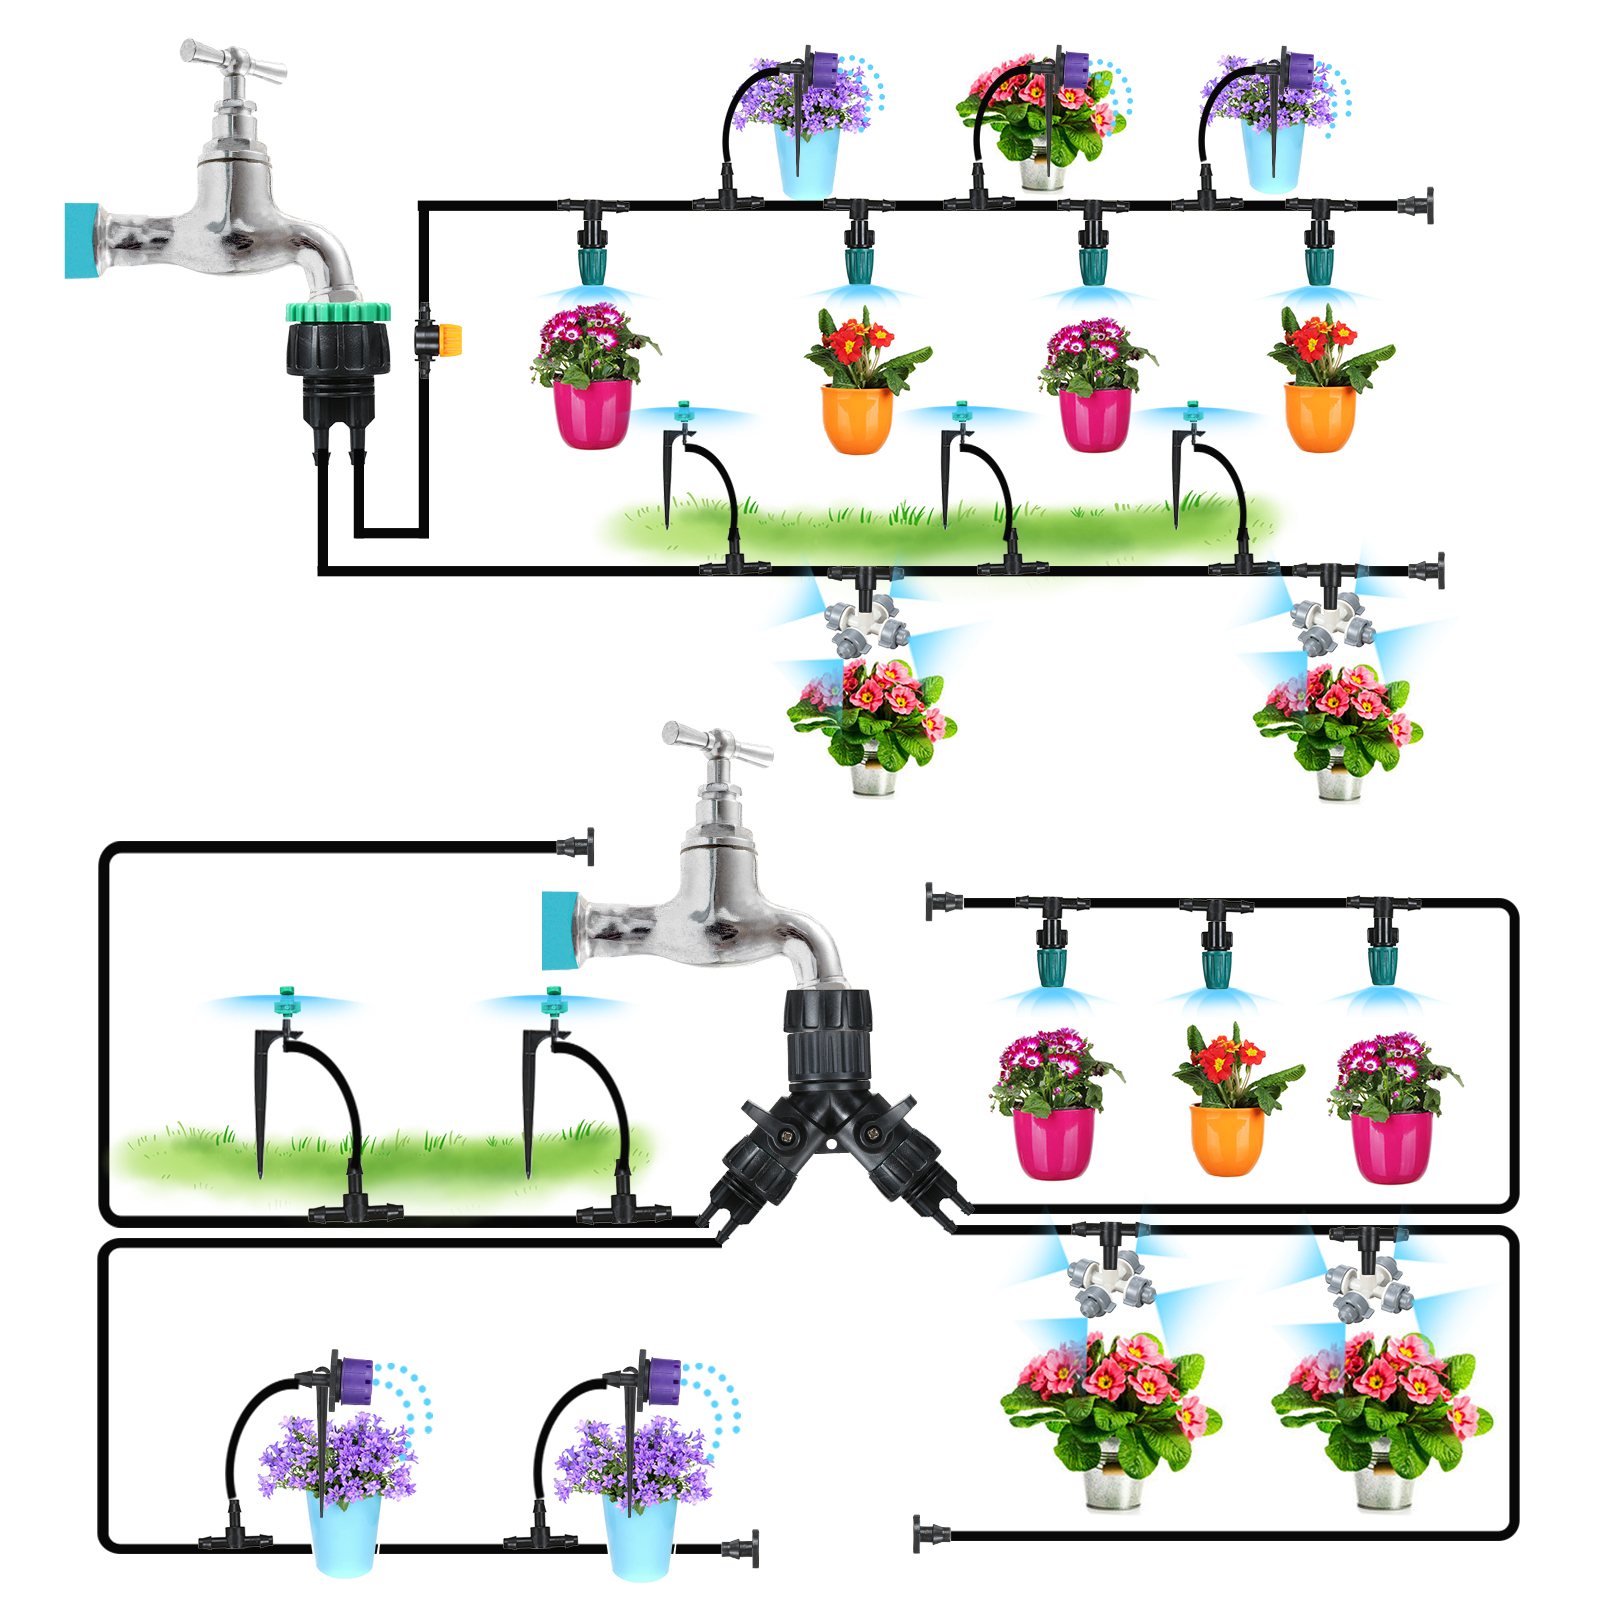 JETEVEN-40M-Drip-Irrigation-Kit-Automatic-Sprinkler-DIY-Garden-Watering-Micro-Drip-Irrigation-System-1898358-3